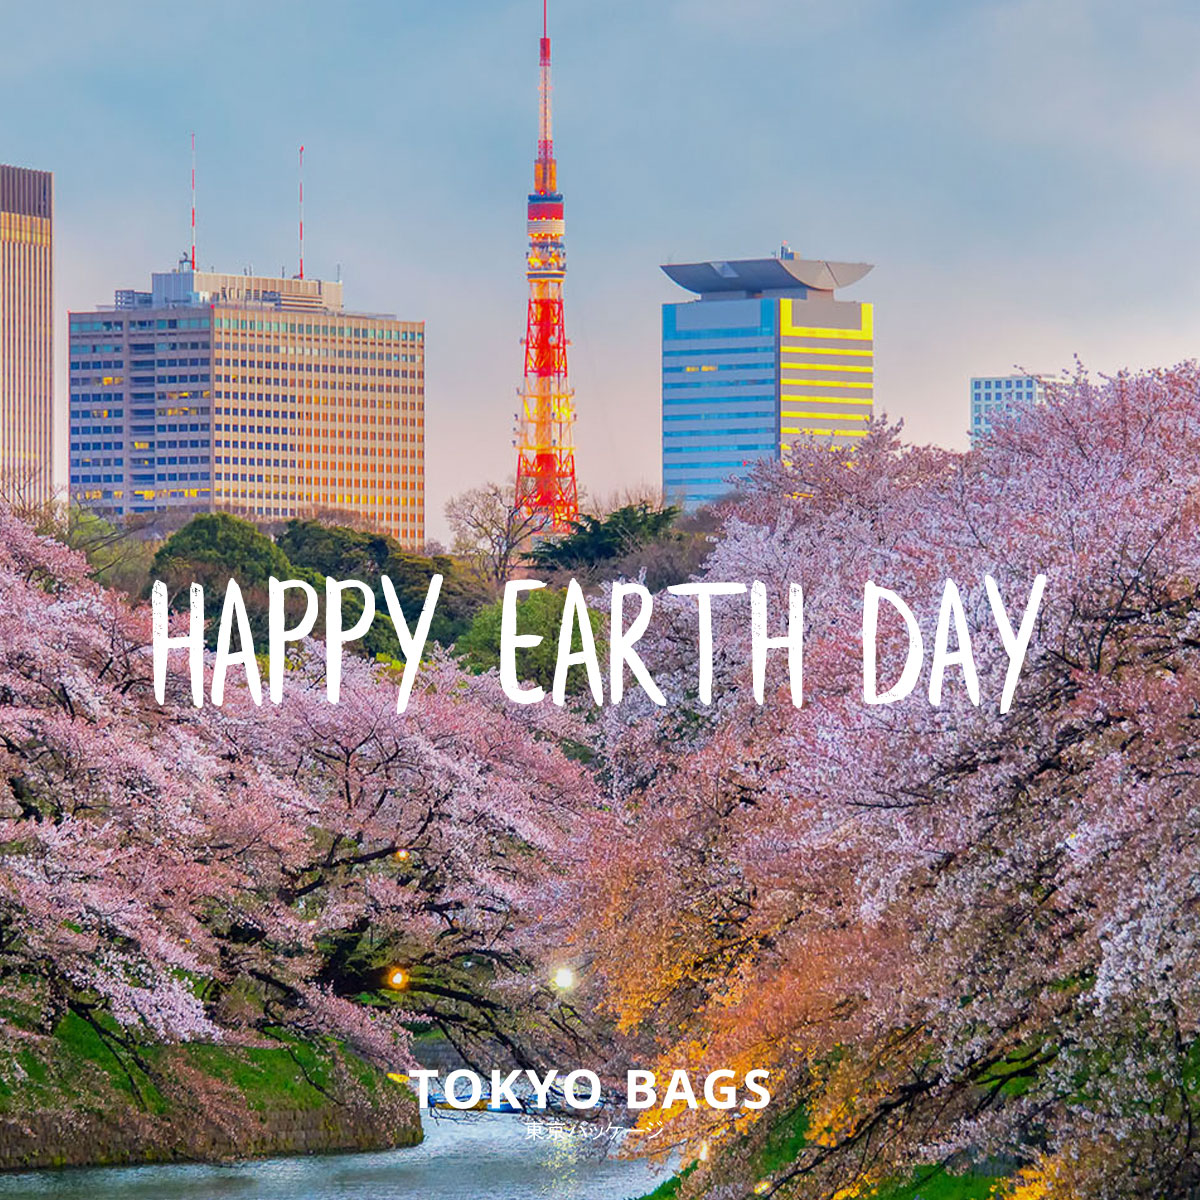 Earth-day